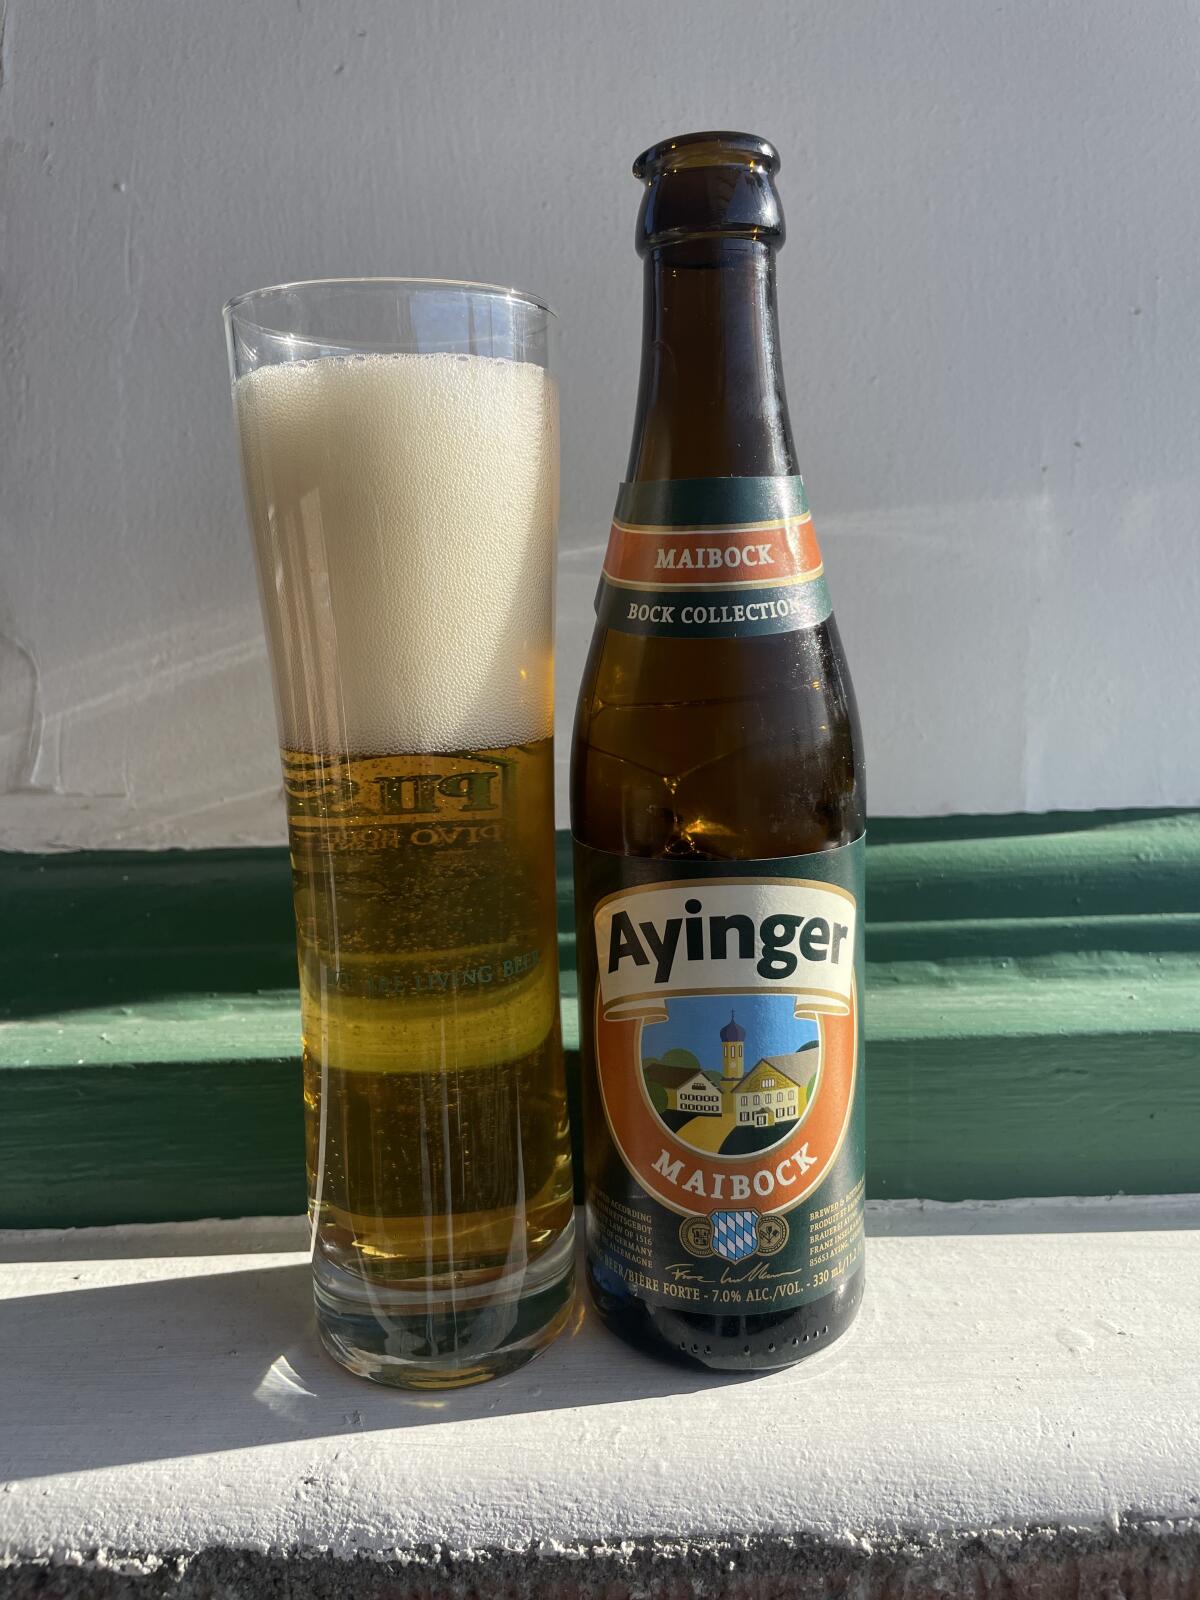 Ayinger Maibock from Brauerei Aying in Aying Germany.